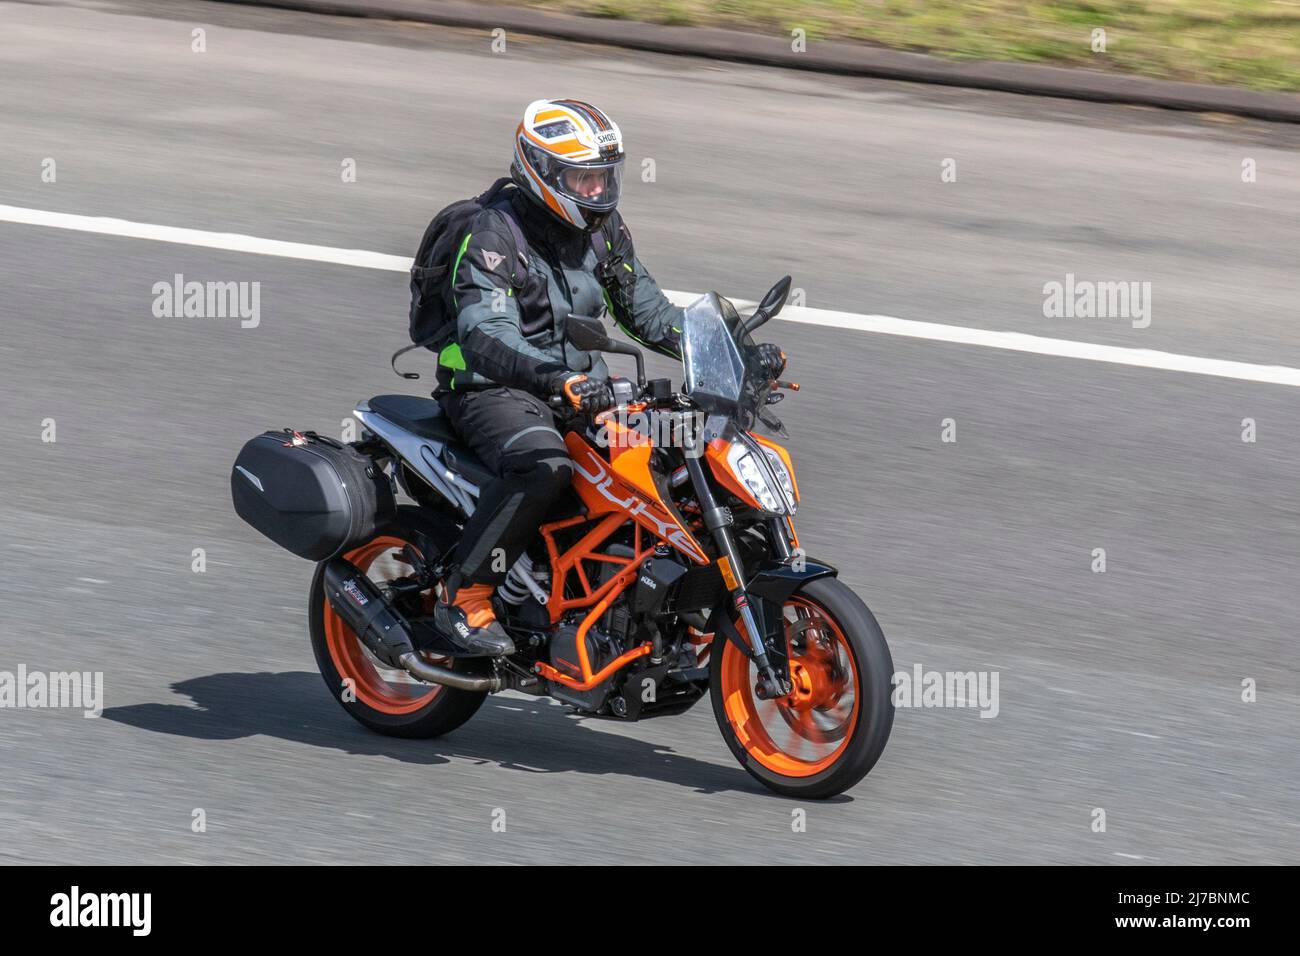 THE KTM 125 Duke motorcycle ride on the M61 motorway UK Stock Photo - Alamy